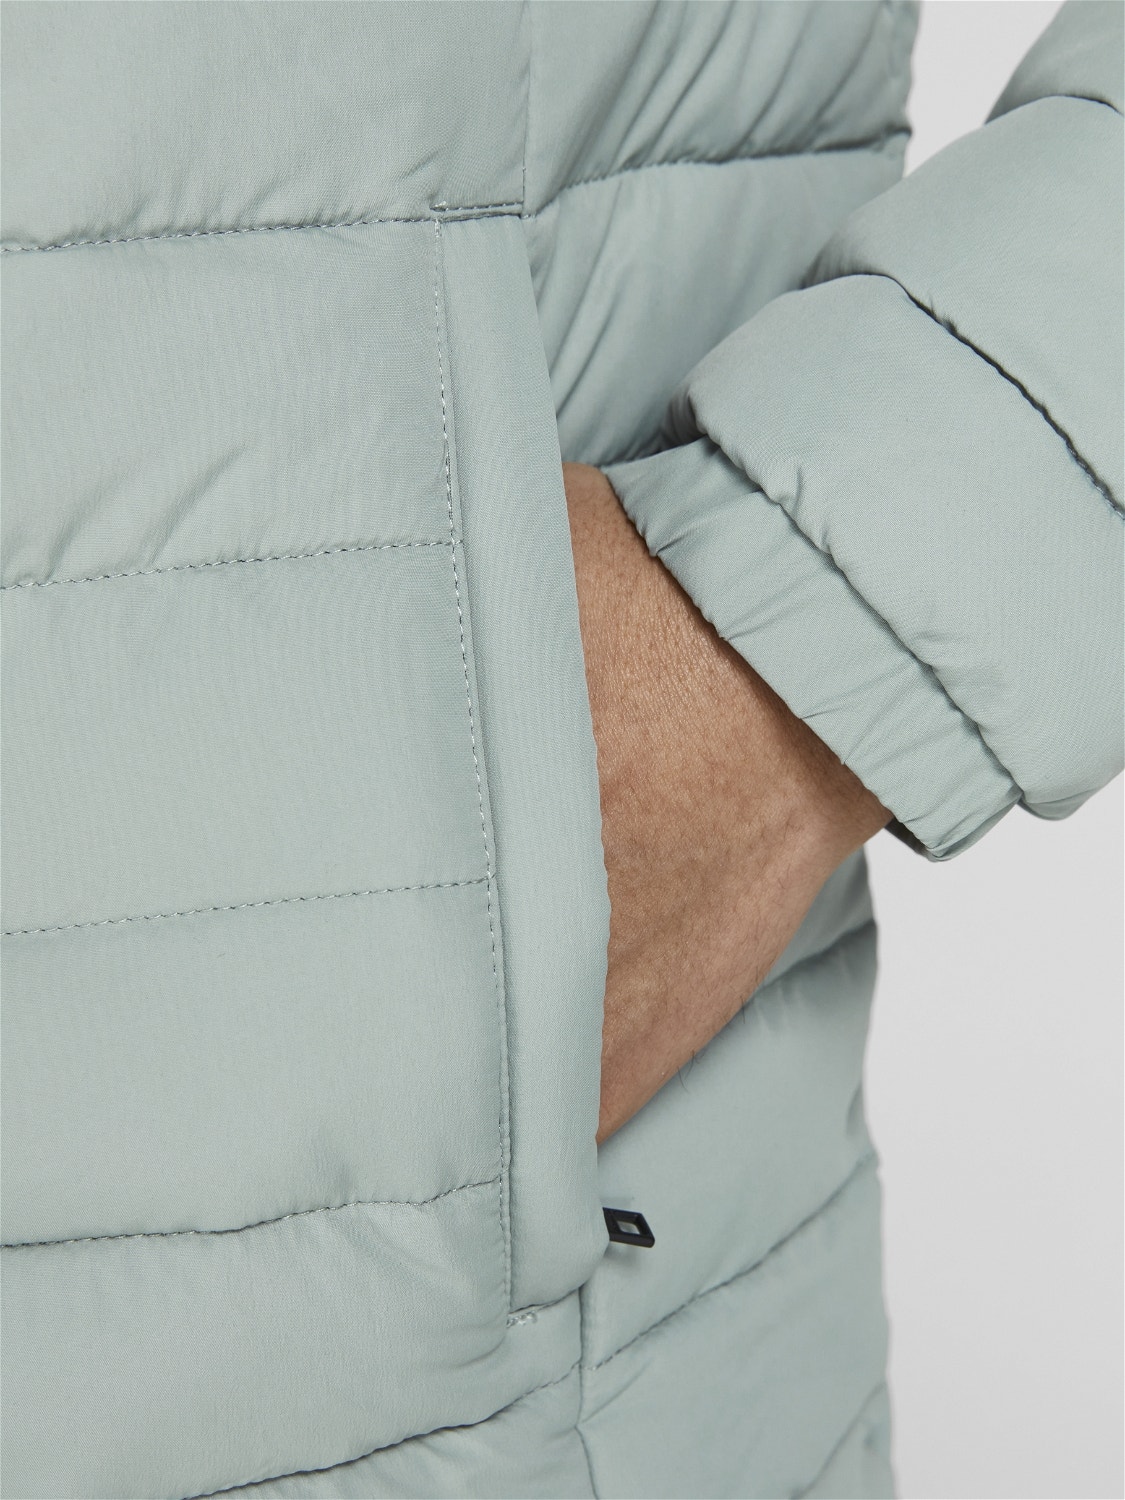 Jack & Jones Puffer jacket -Slate Gray - 12211129